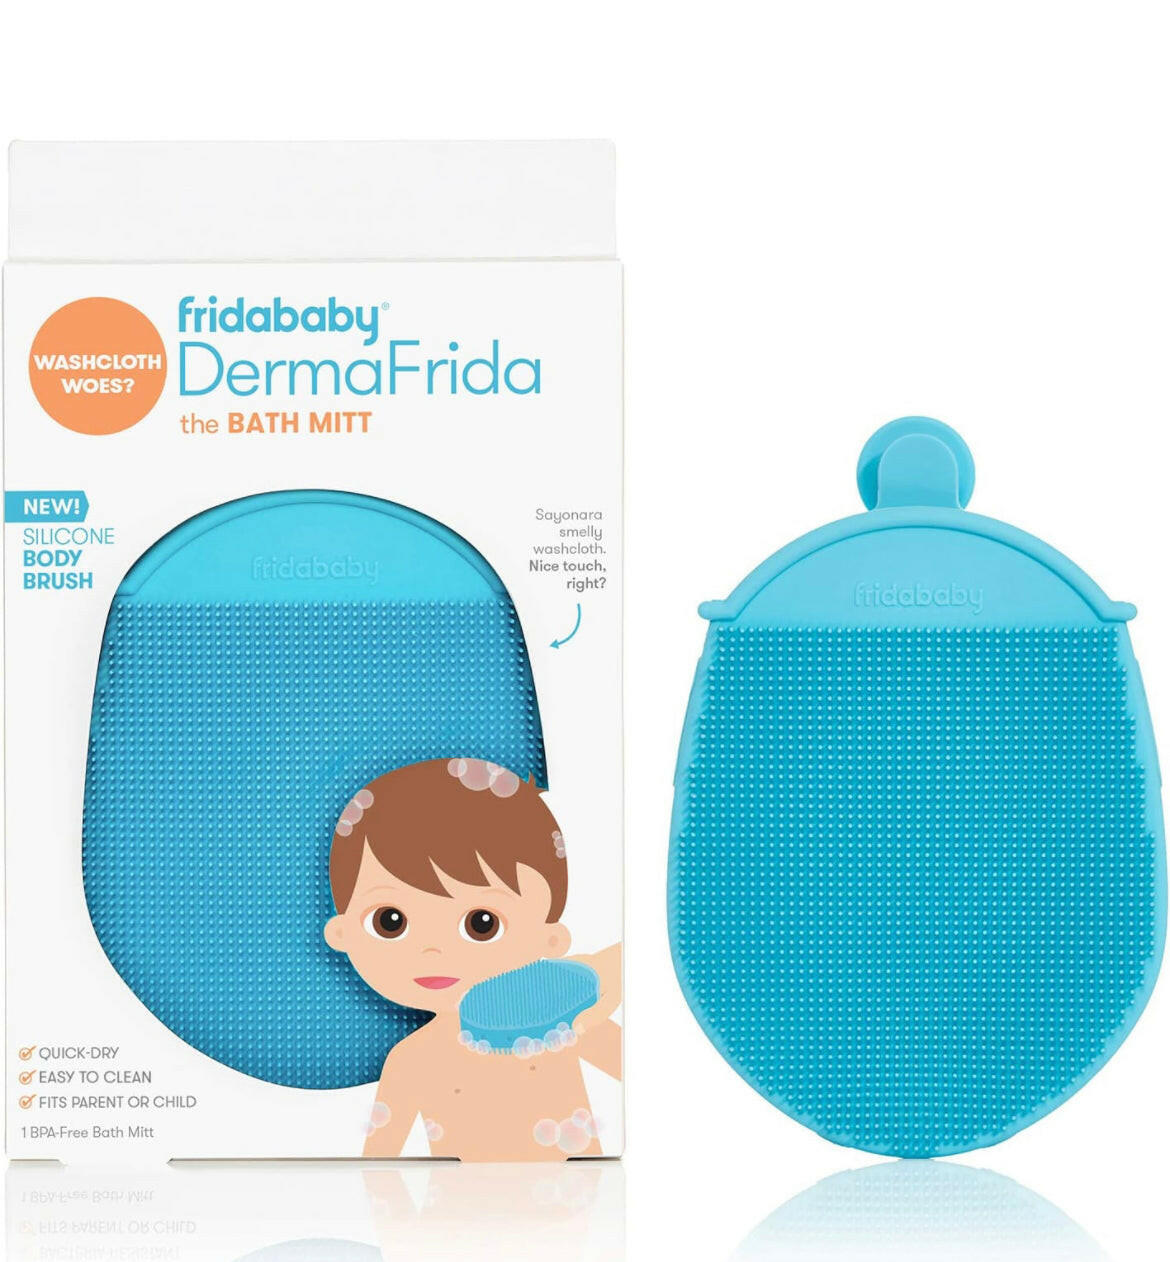 DermaFrida the Bath Mitt by Frida Baby | Toddler Quick-Dry Body Bath Brush.